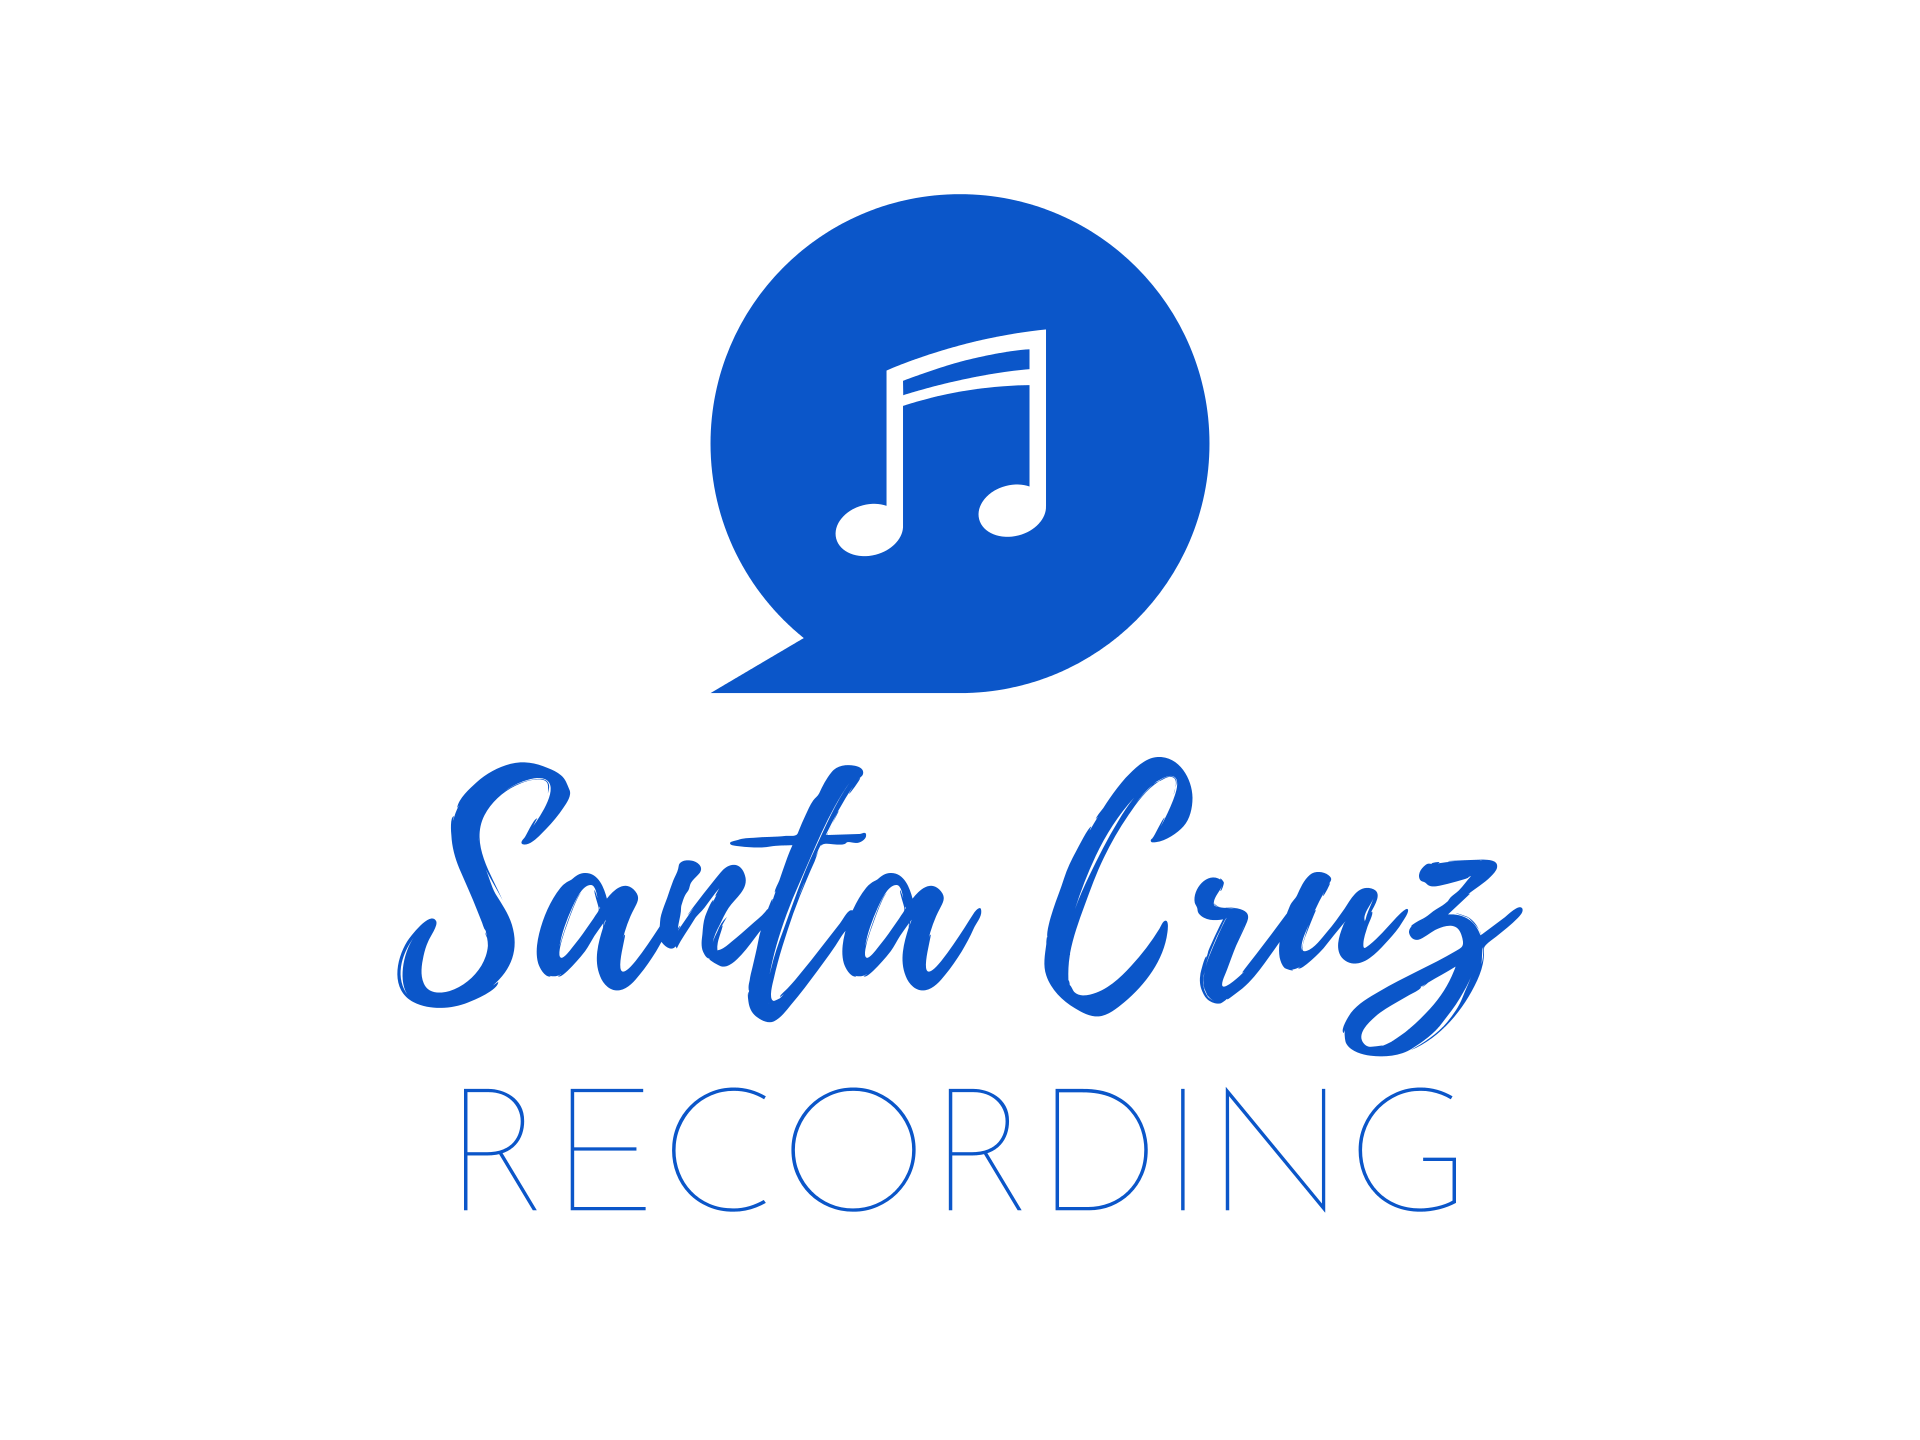 Santa Cruz Recording